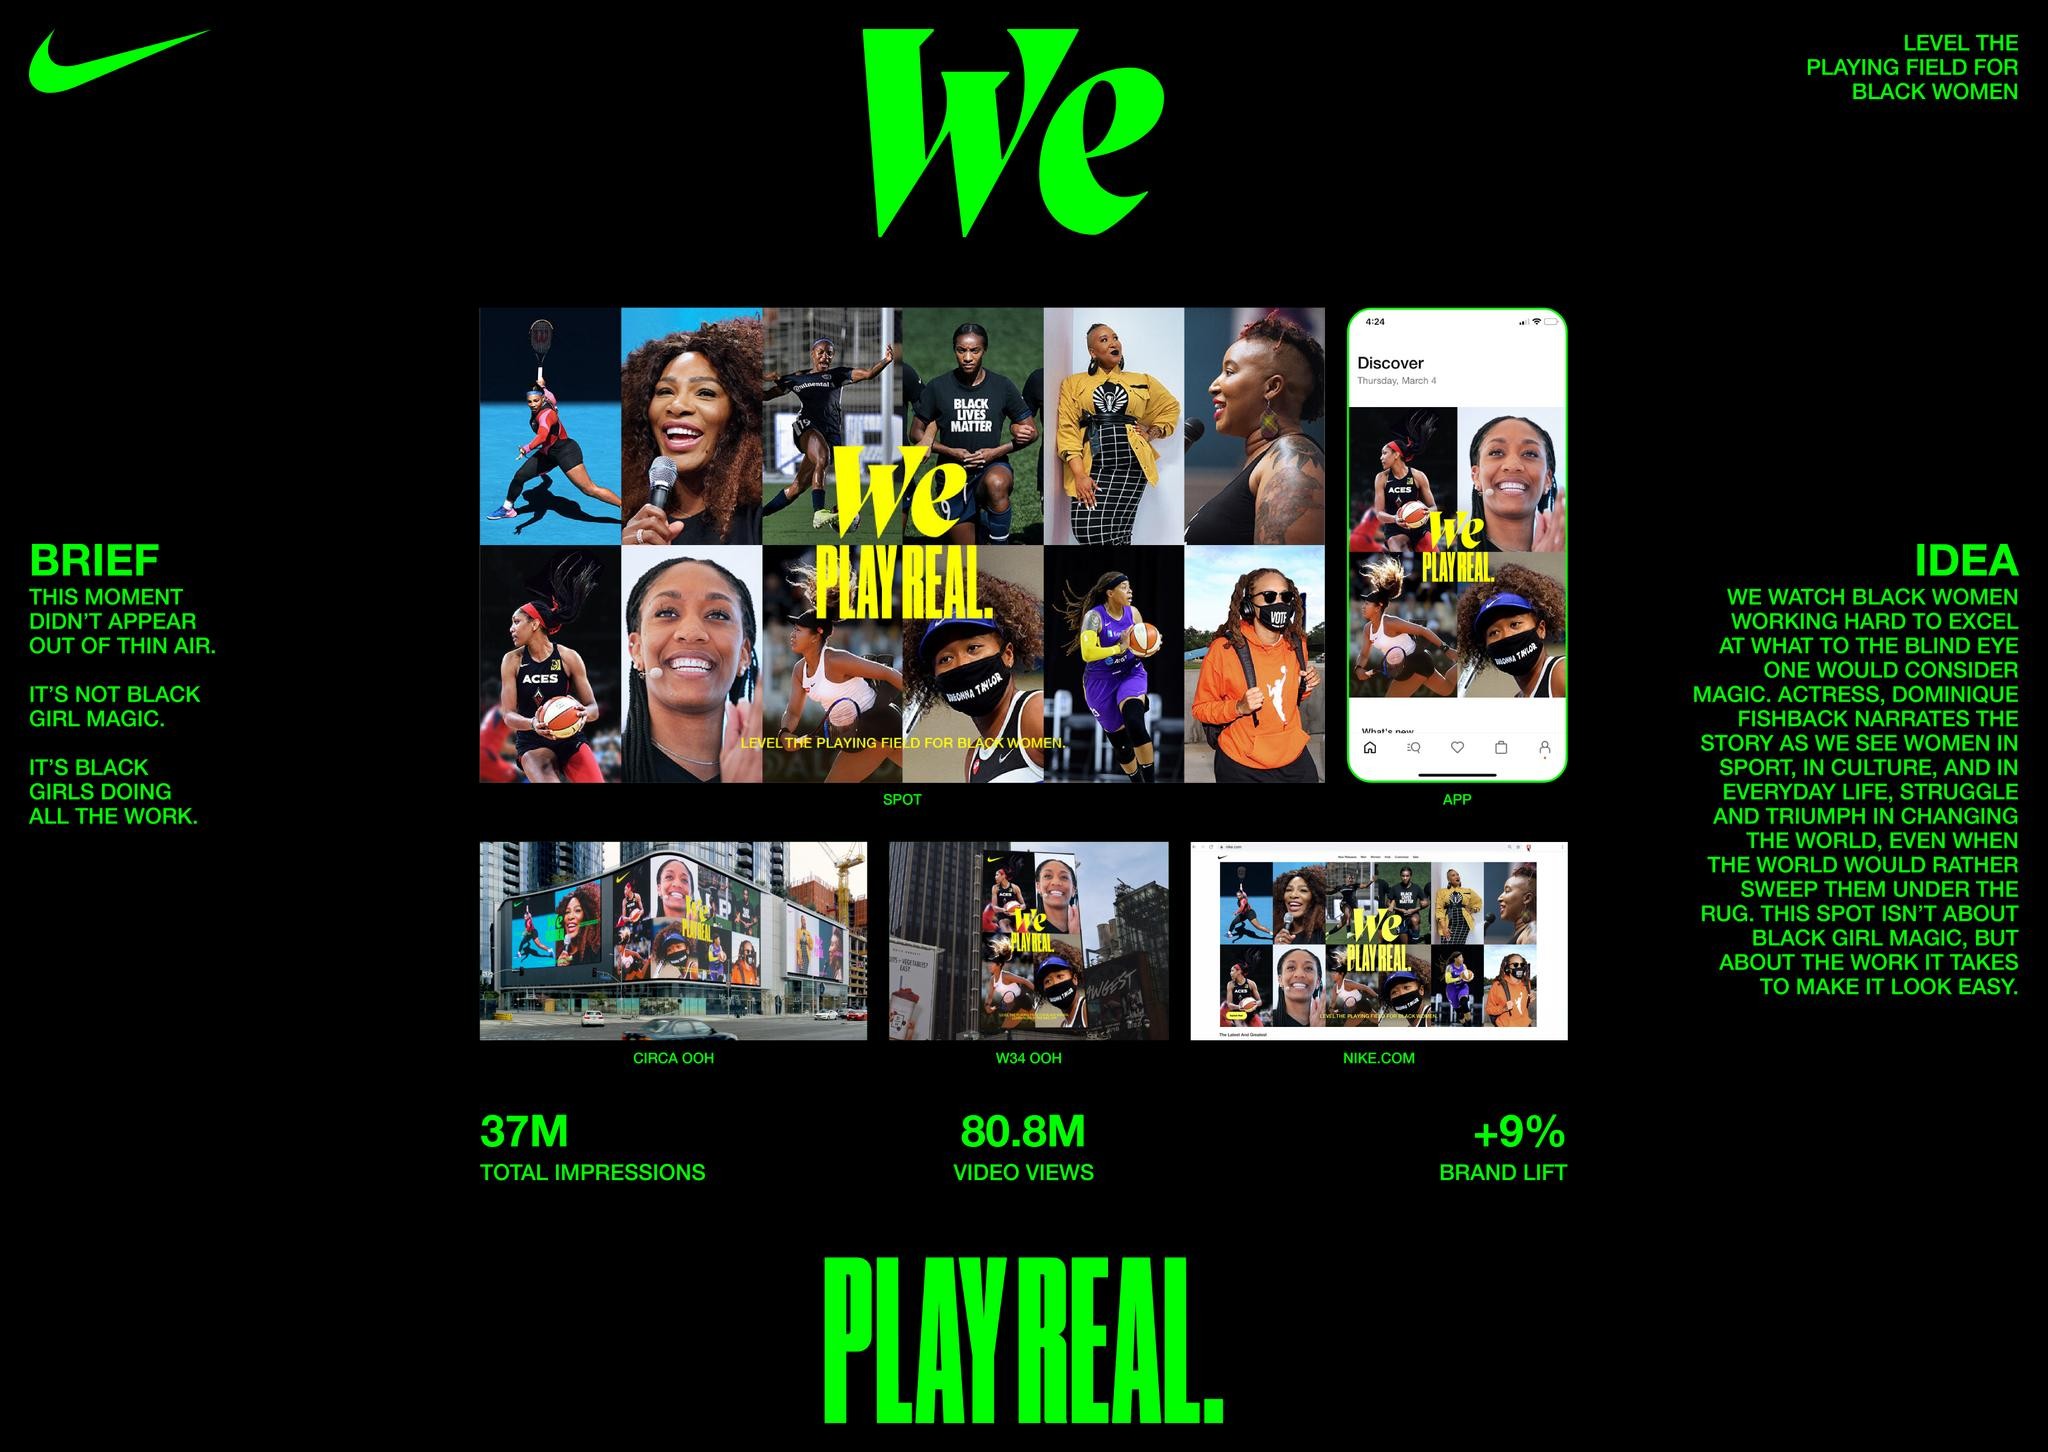 Nike: We Play Real